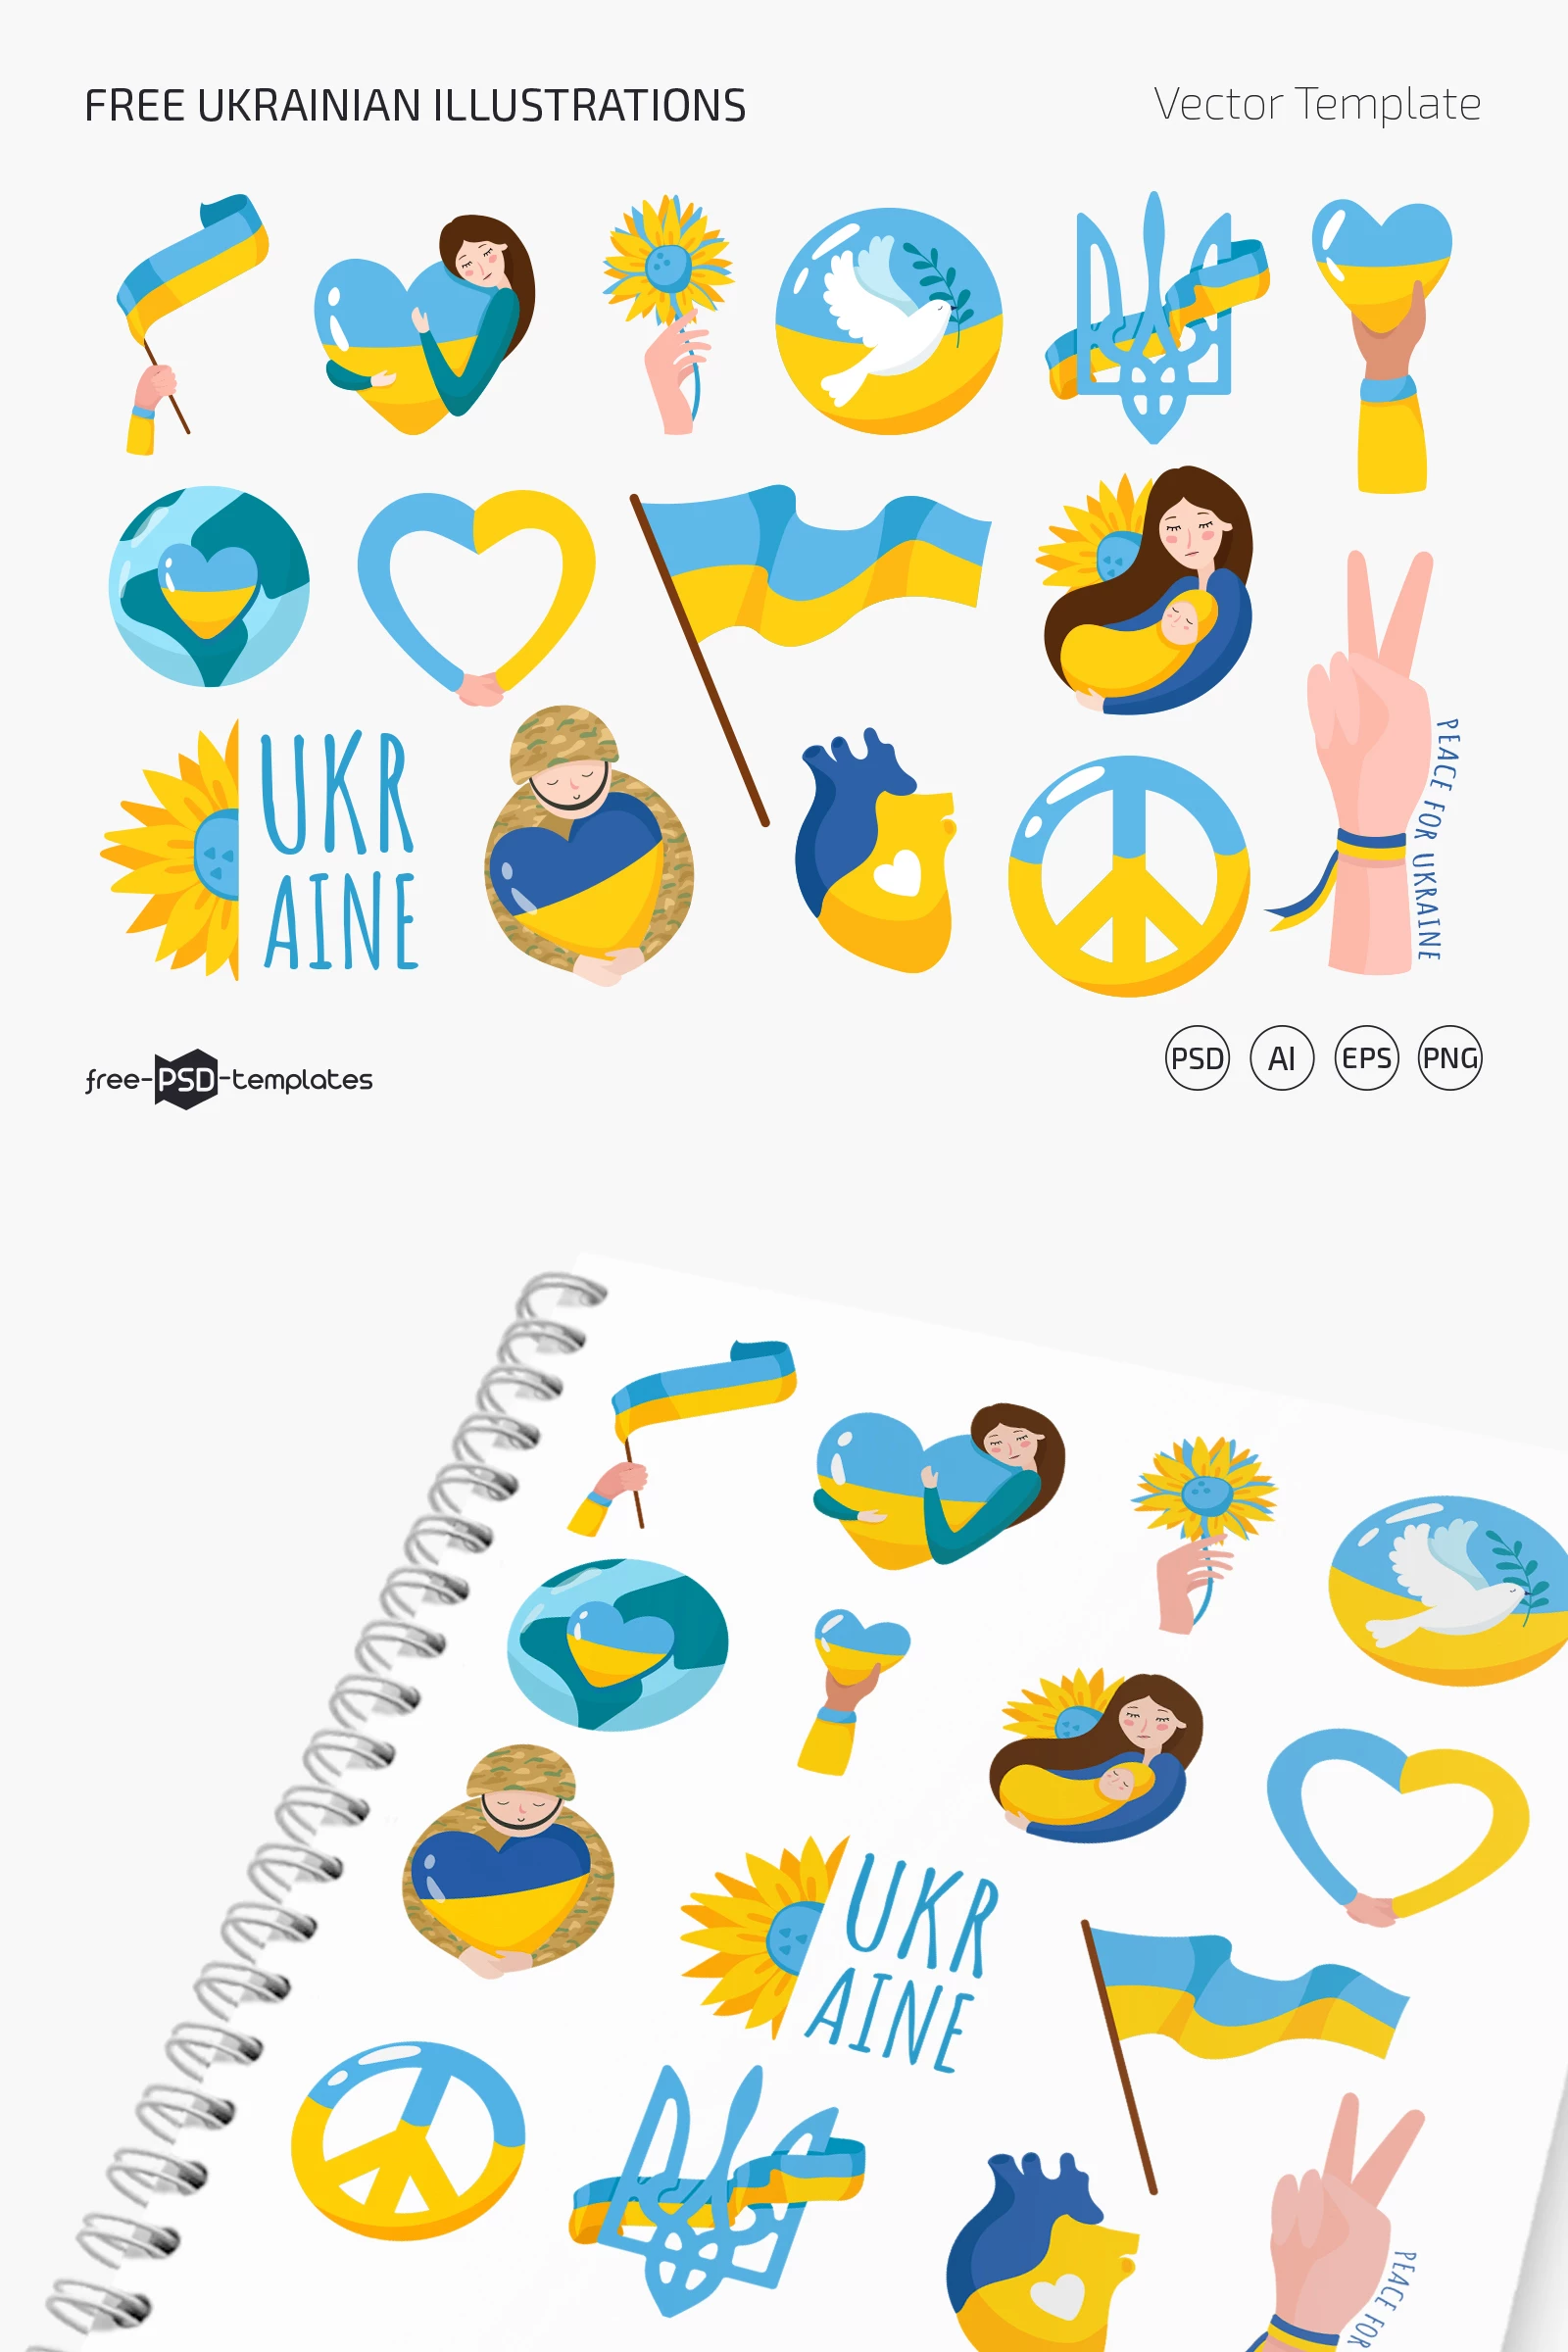 Free Ukrainian Illustrations Template (PSD, AI, EPS, PNG)